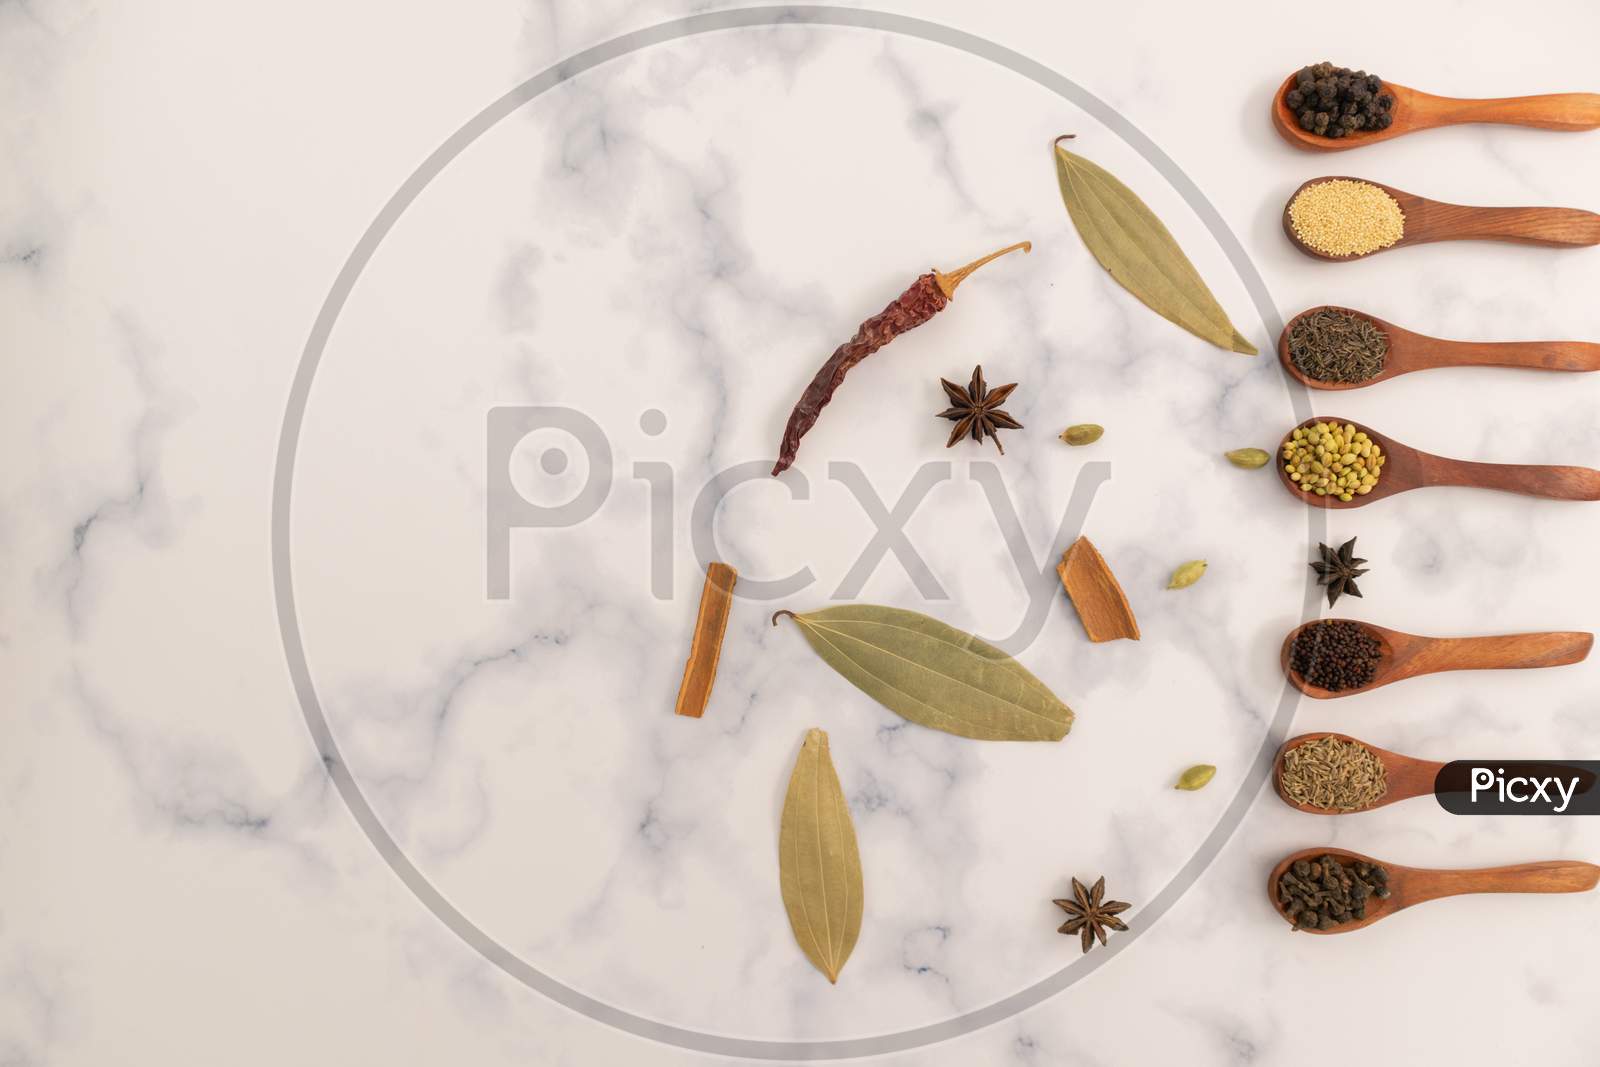 Cinnamon stick, Dried Red Chili, Star Anise, Elachi, Black Pepper, Jira, dill seeds, coriander seeds, biriyani leaves and cloves